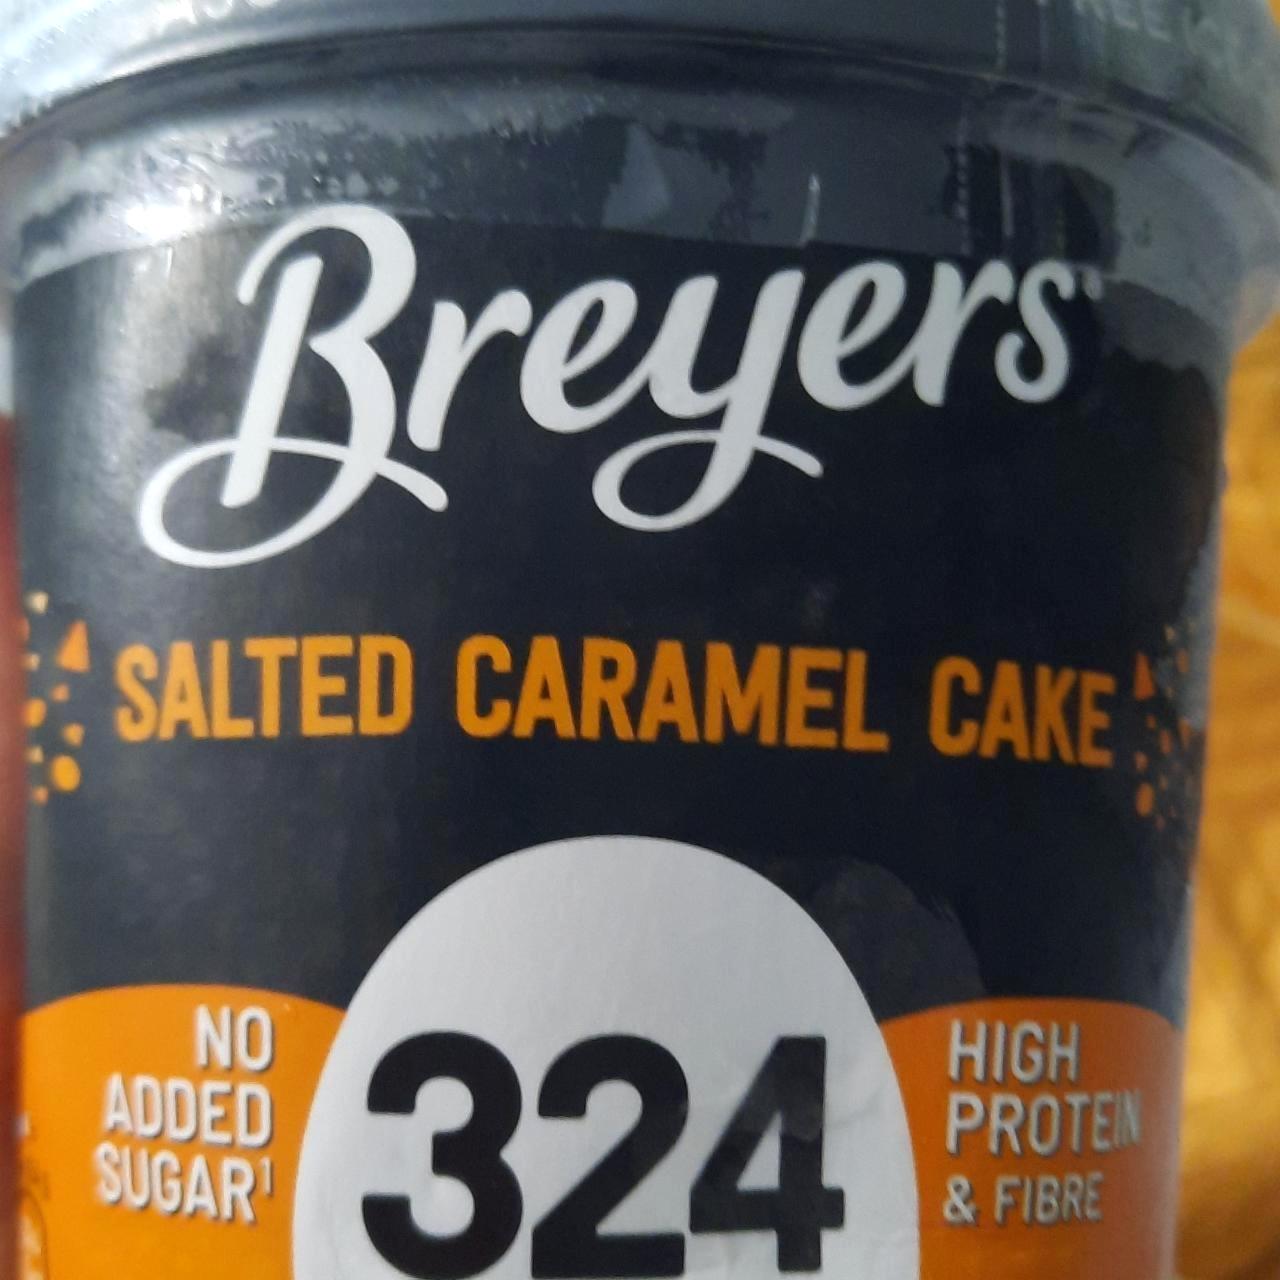 Képek - Salted caramel cake Breyers